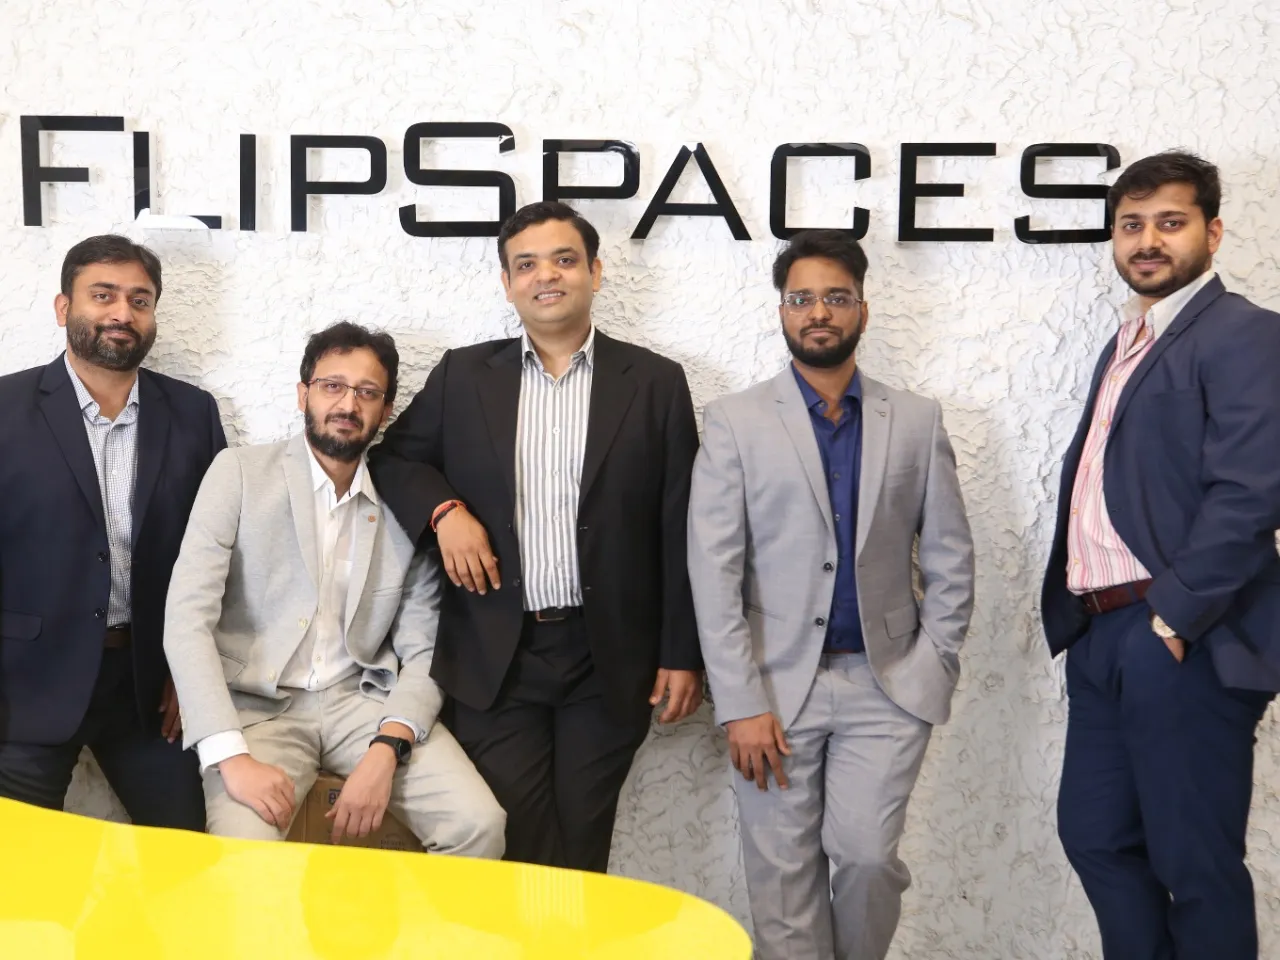 Tech-driven interior design startup Flipspaces raises $4M led by existing investors